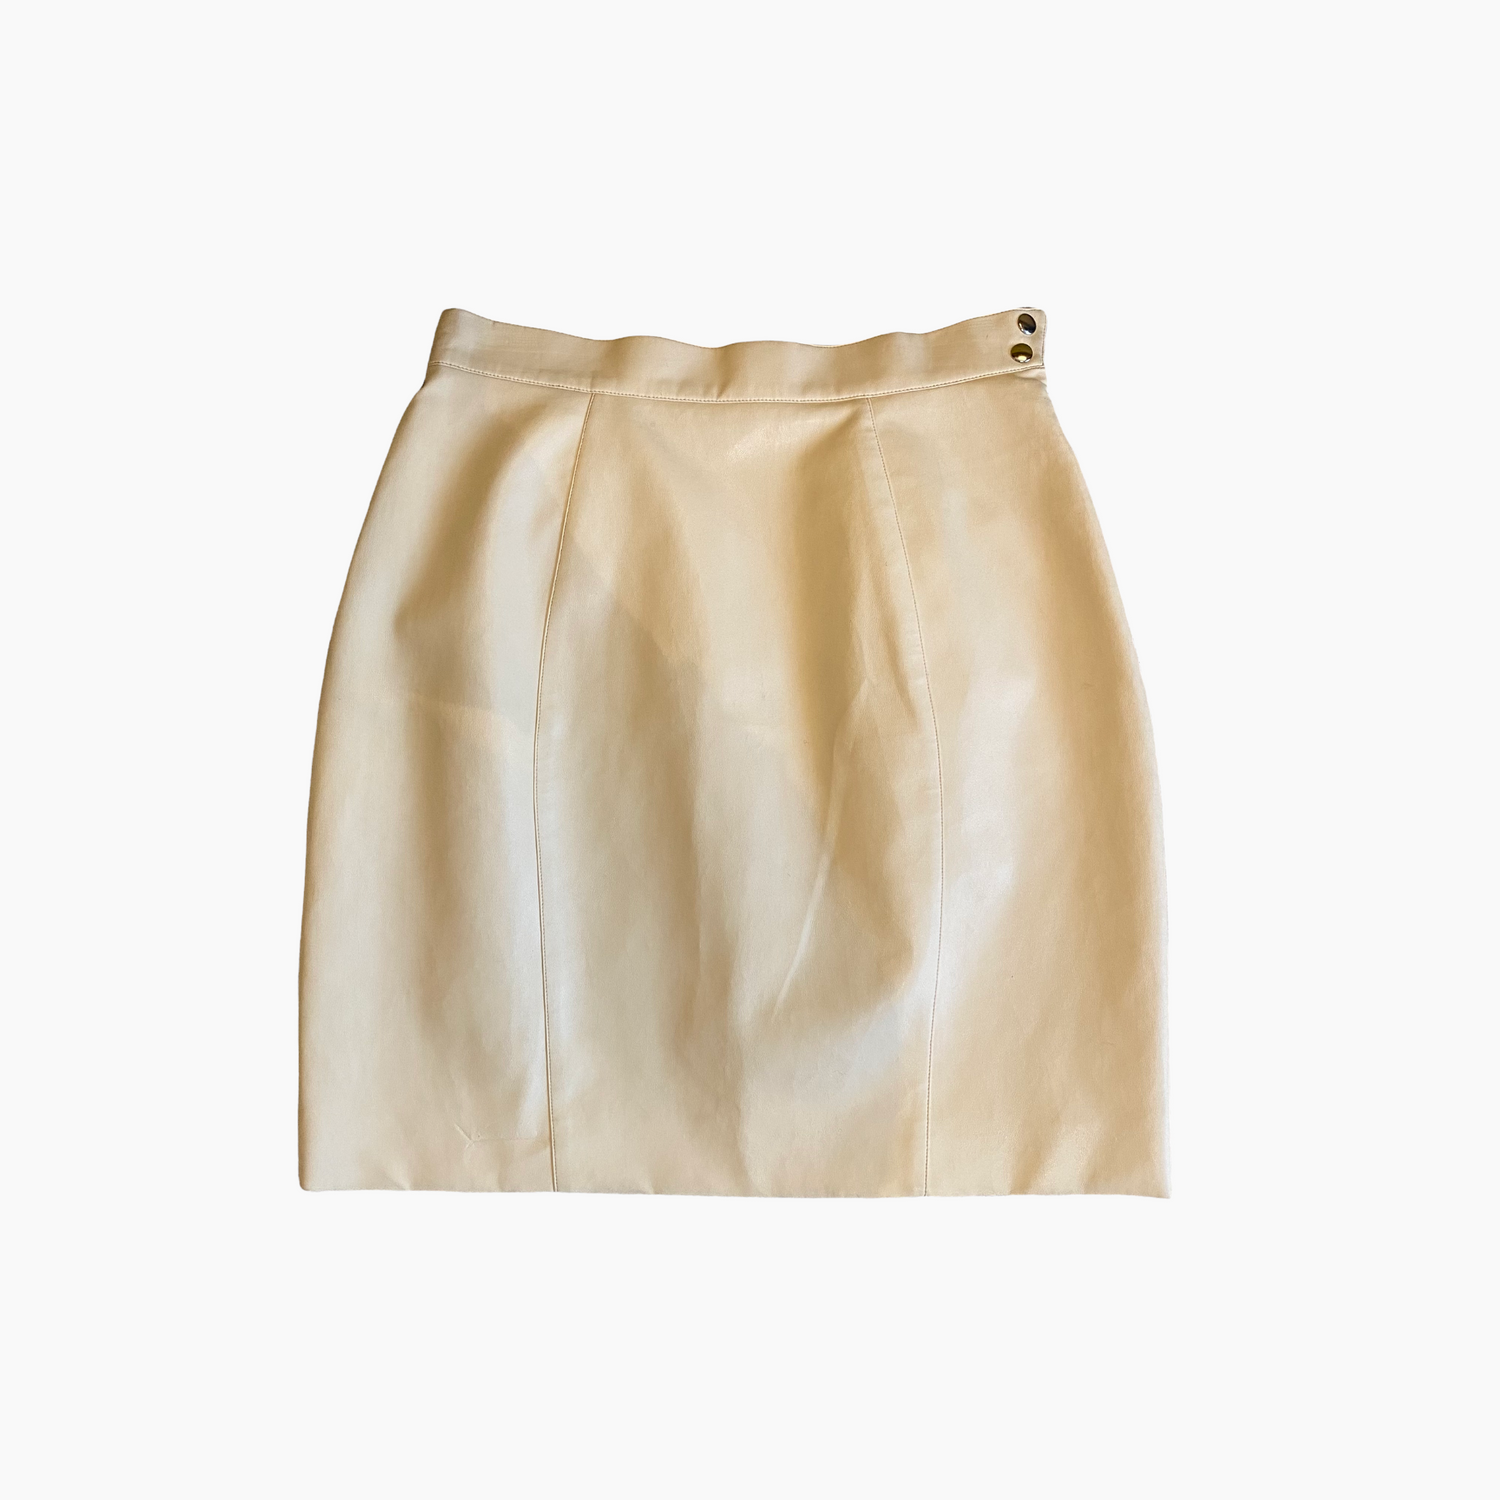 Mugler vintage skirt in beige pleather beige - M - 1990s